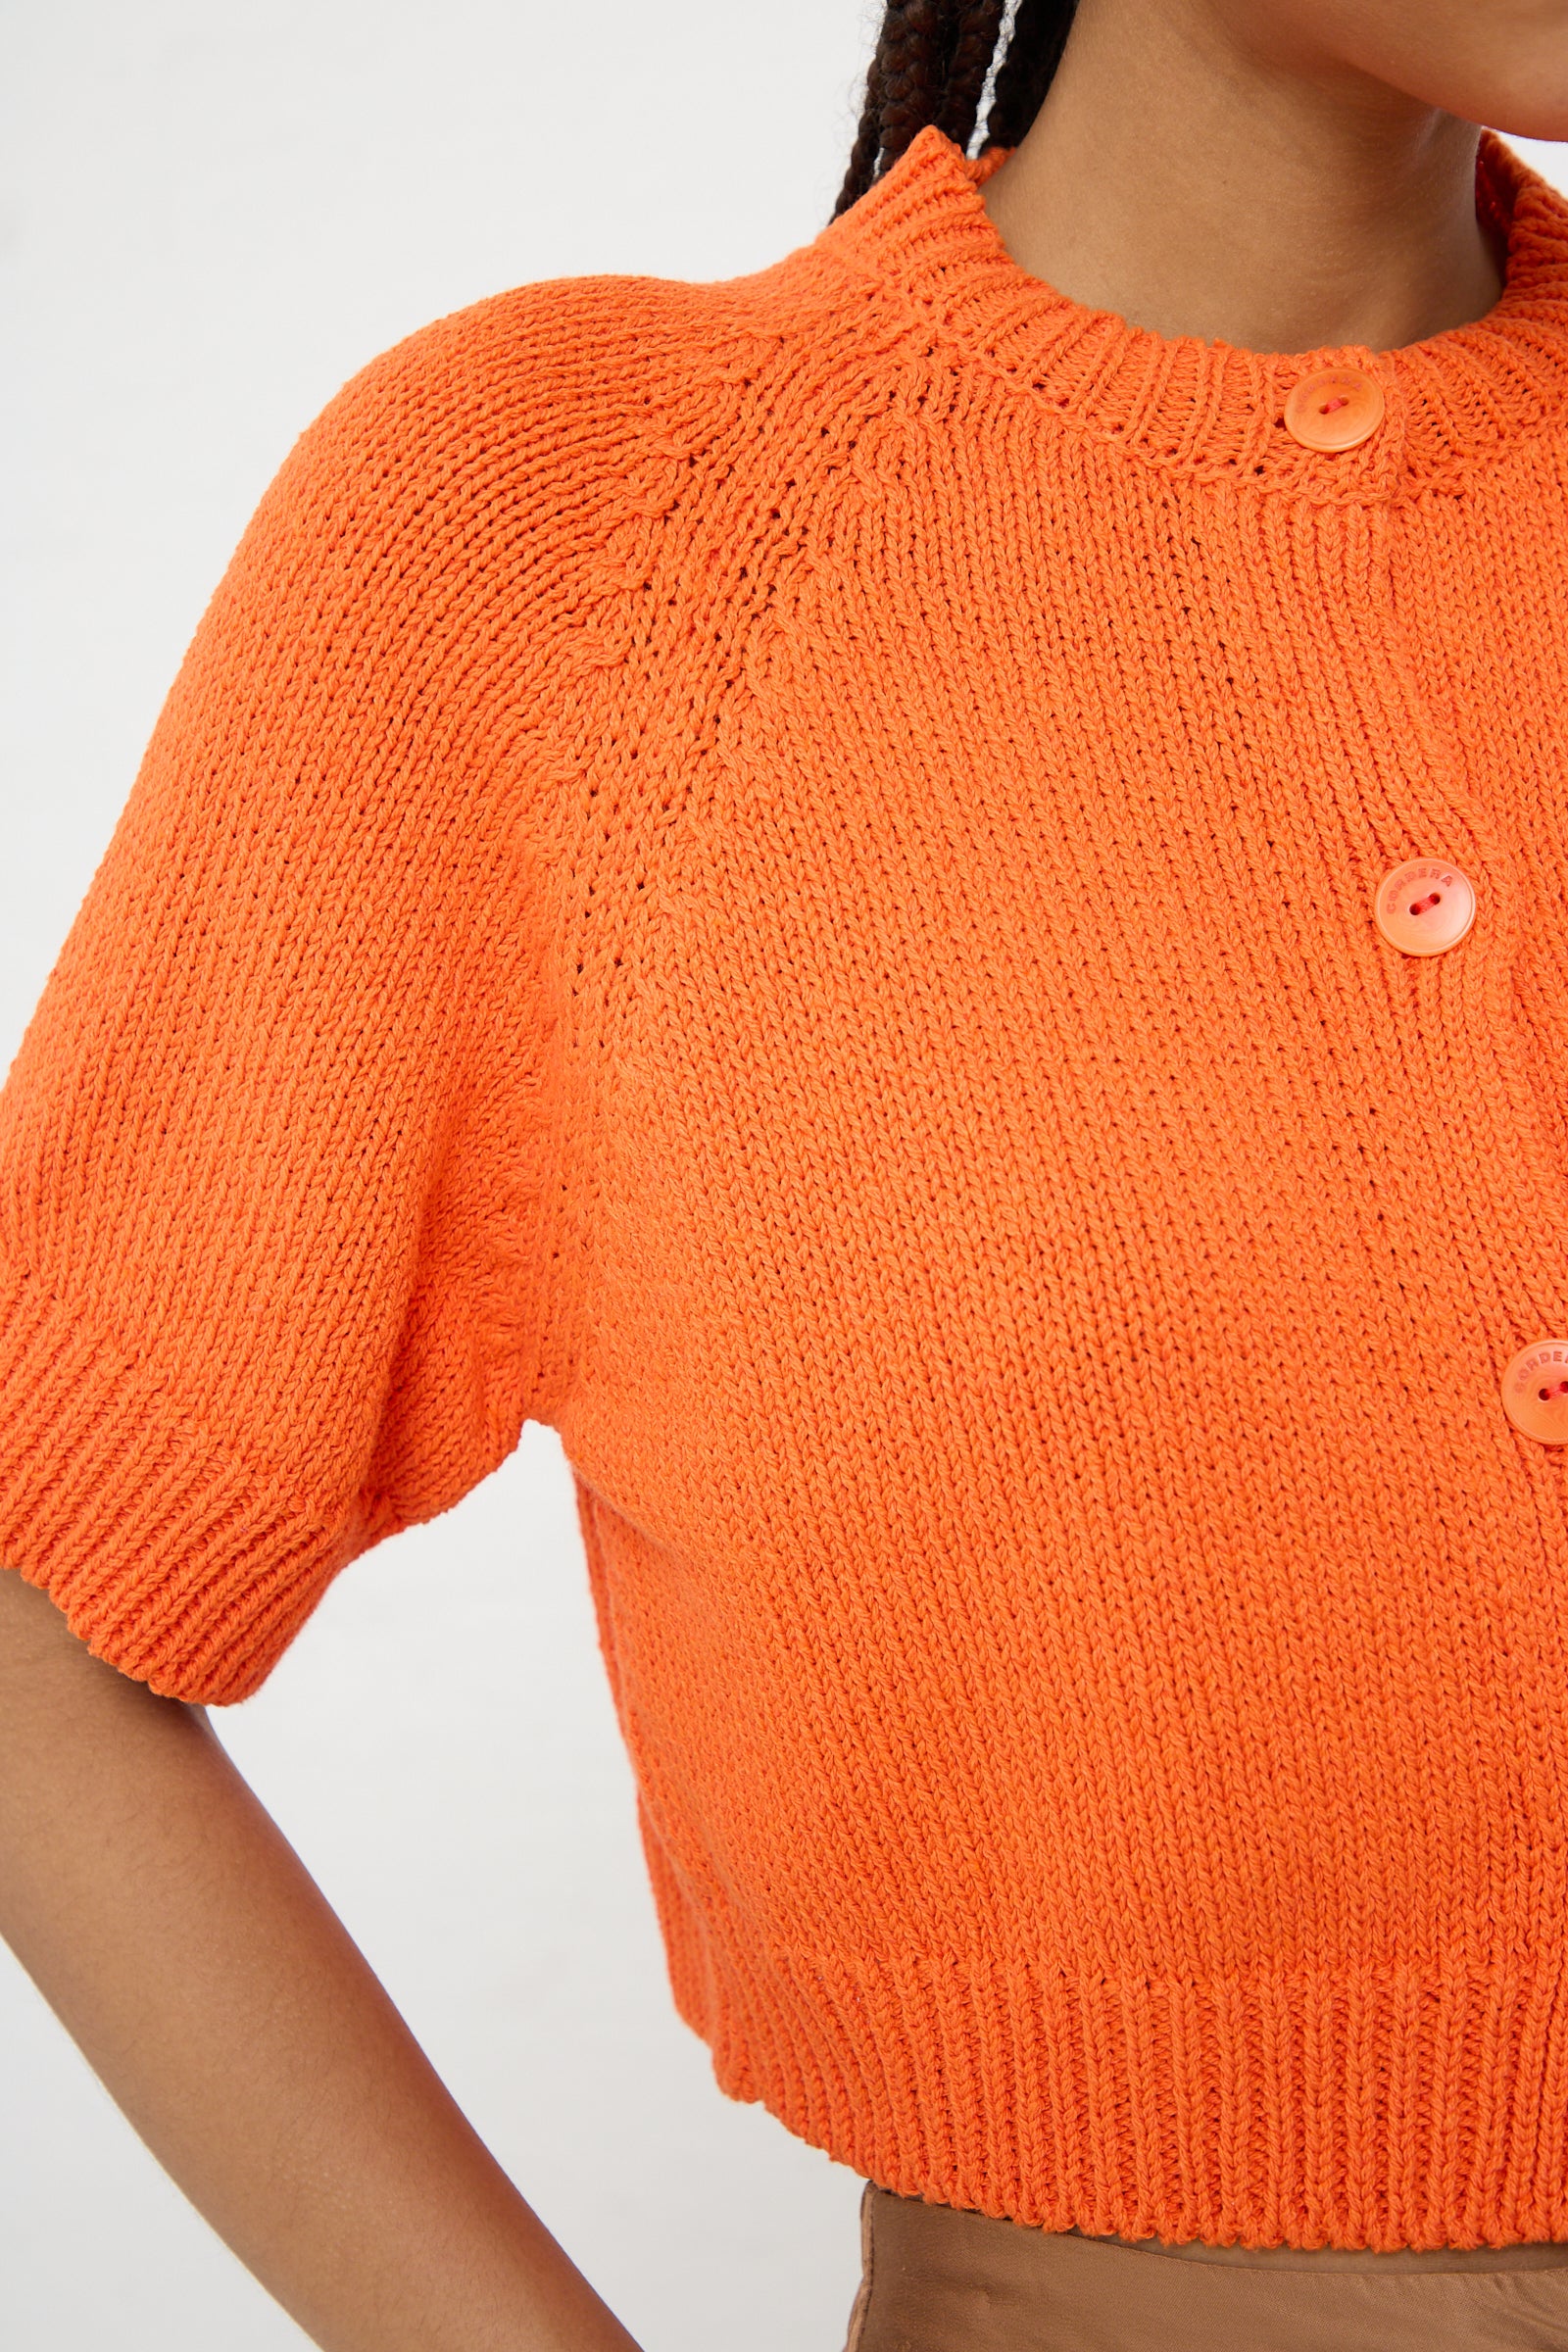 Cordera Orange Crewneck Sweater